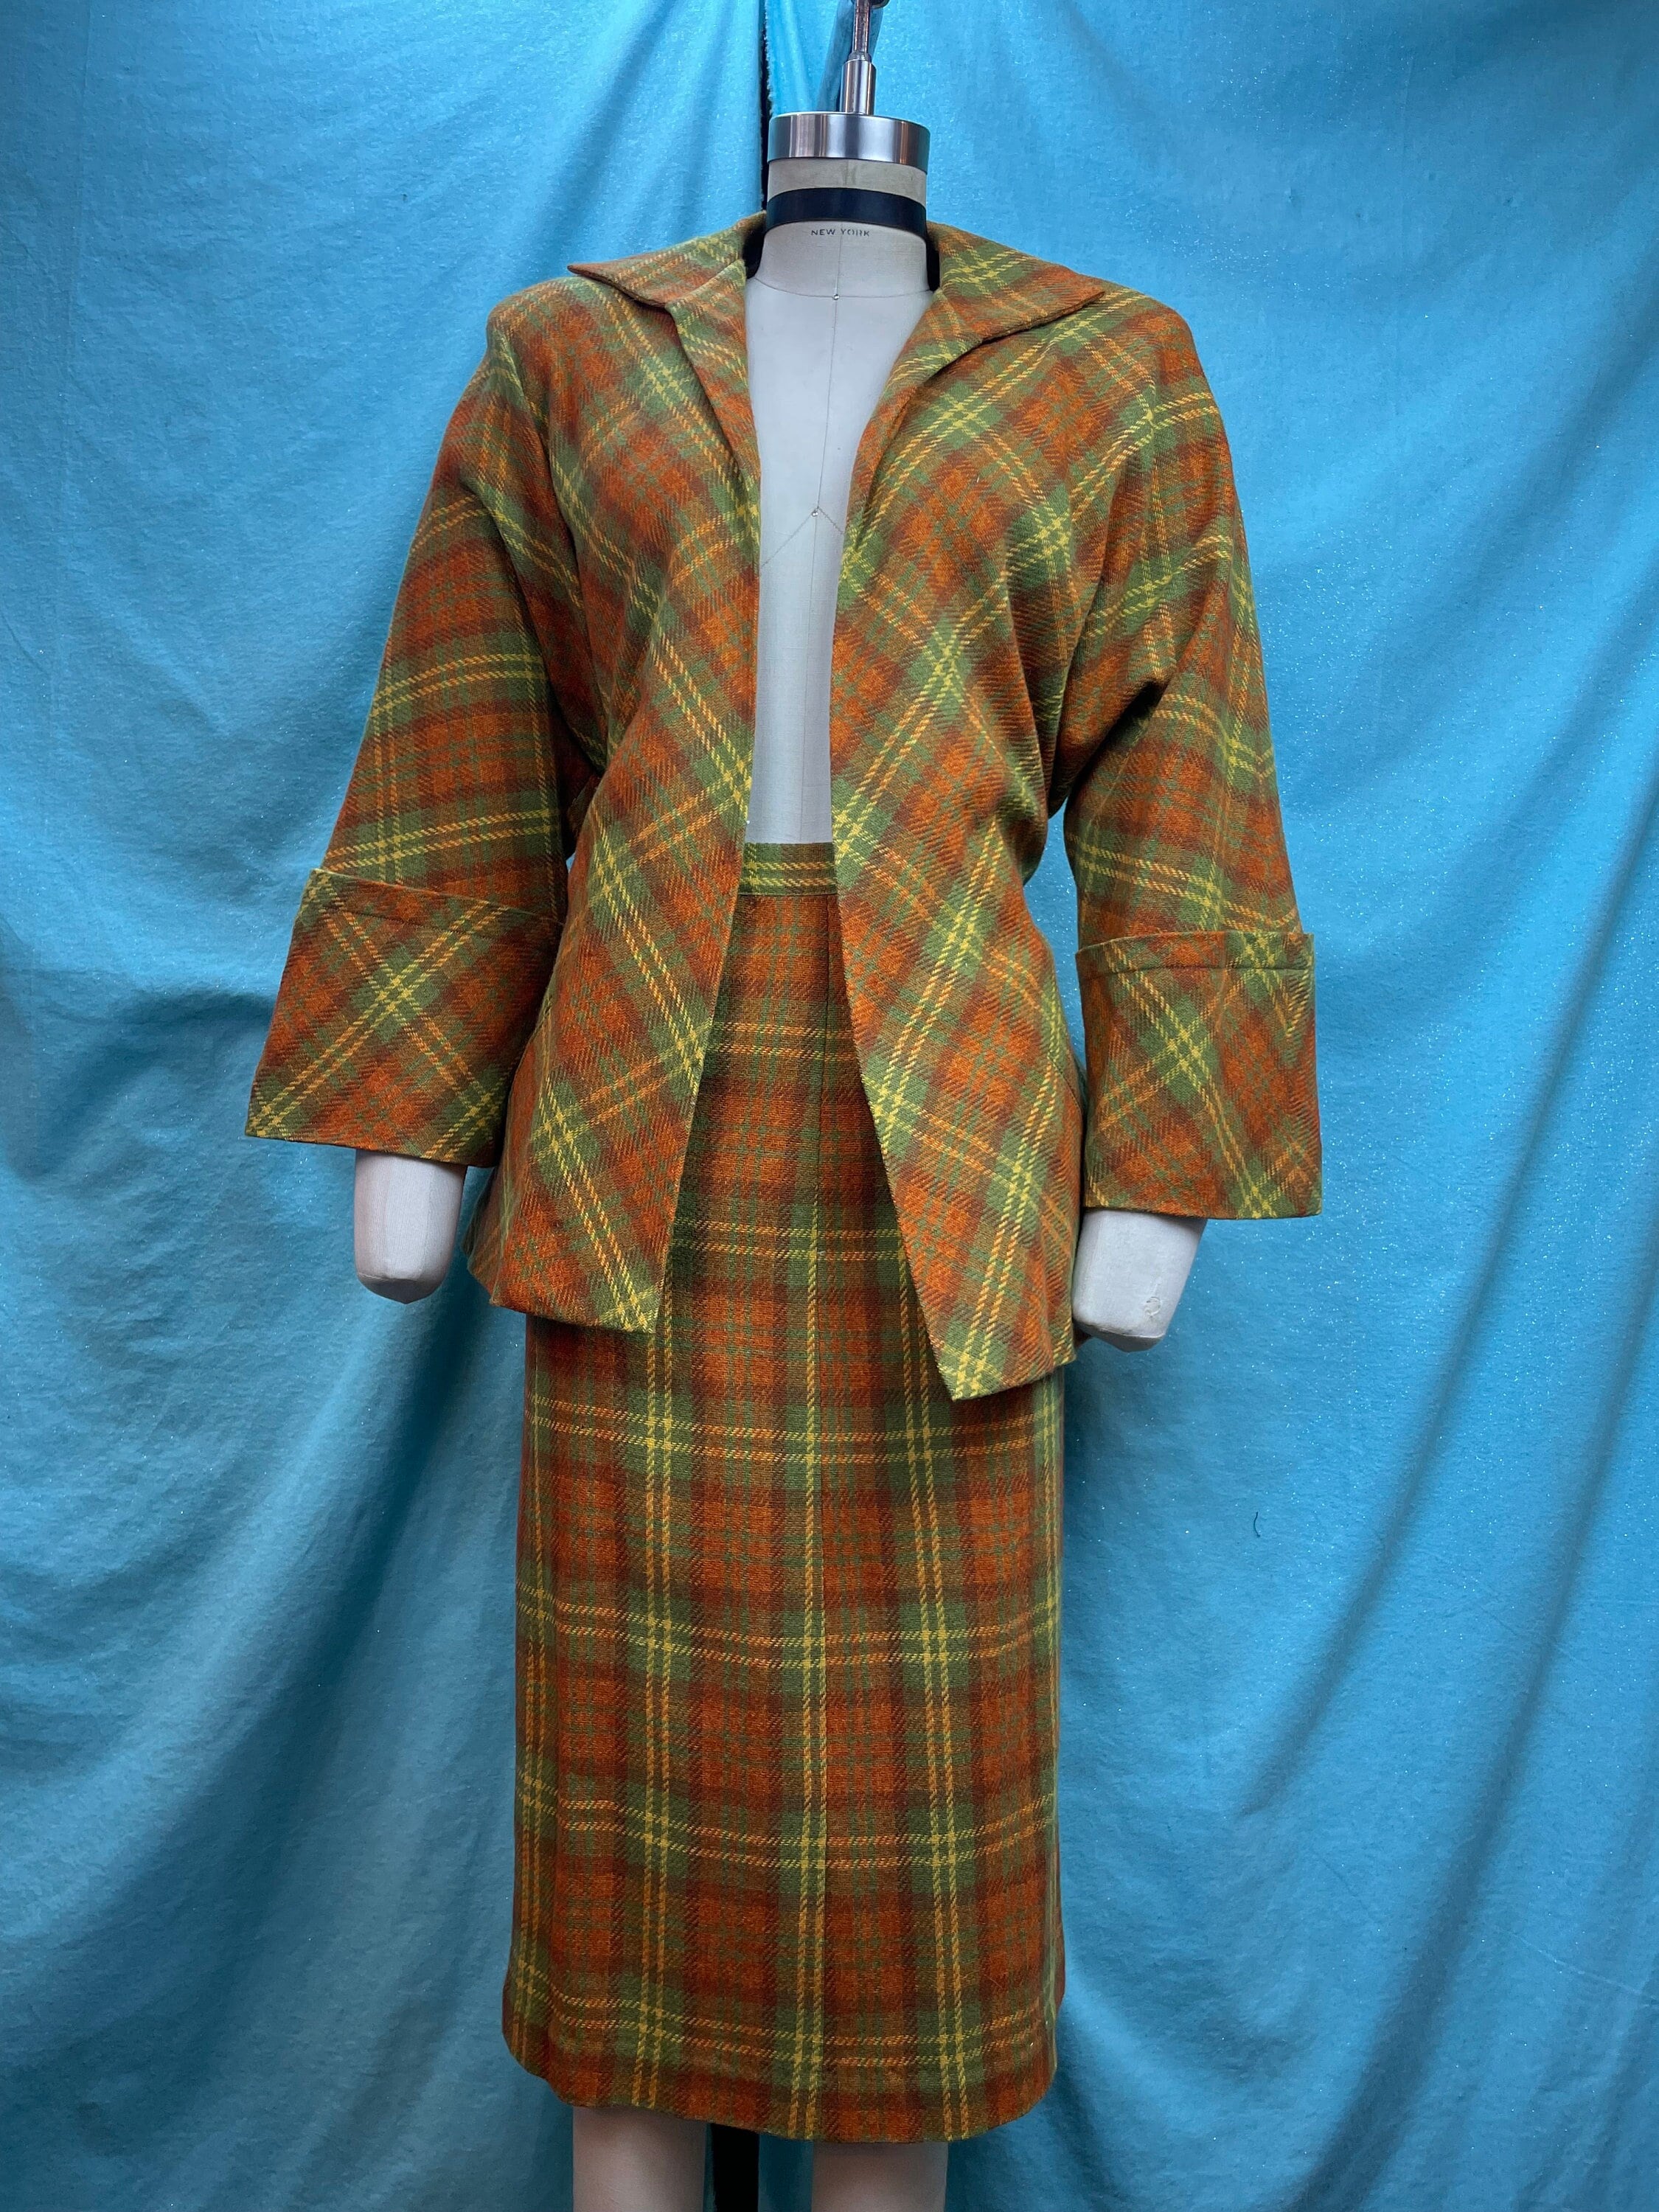 Real Vintage Search Engine 1940S W25 Vintage Set 40S Jacket Skirt Wool Plaid Tartan Swing Coat Pencil Green Orange Vintage Suit 2Pc $210.00 AT vintagedancer.com